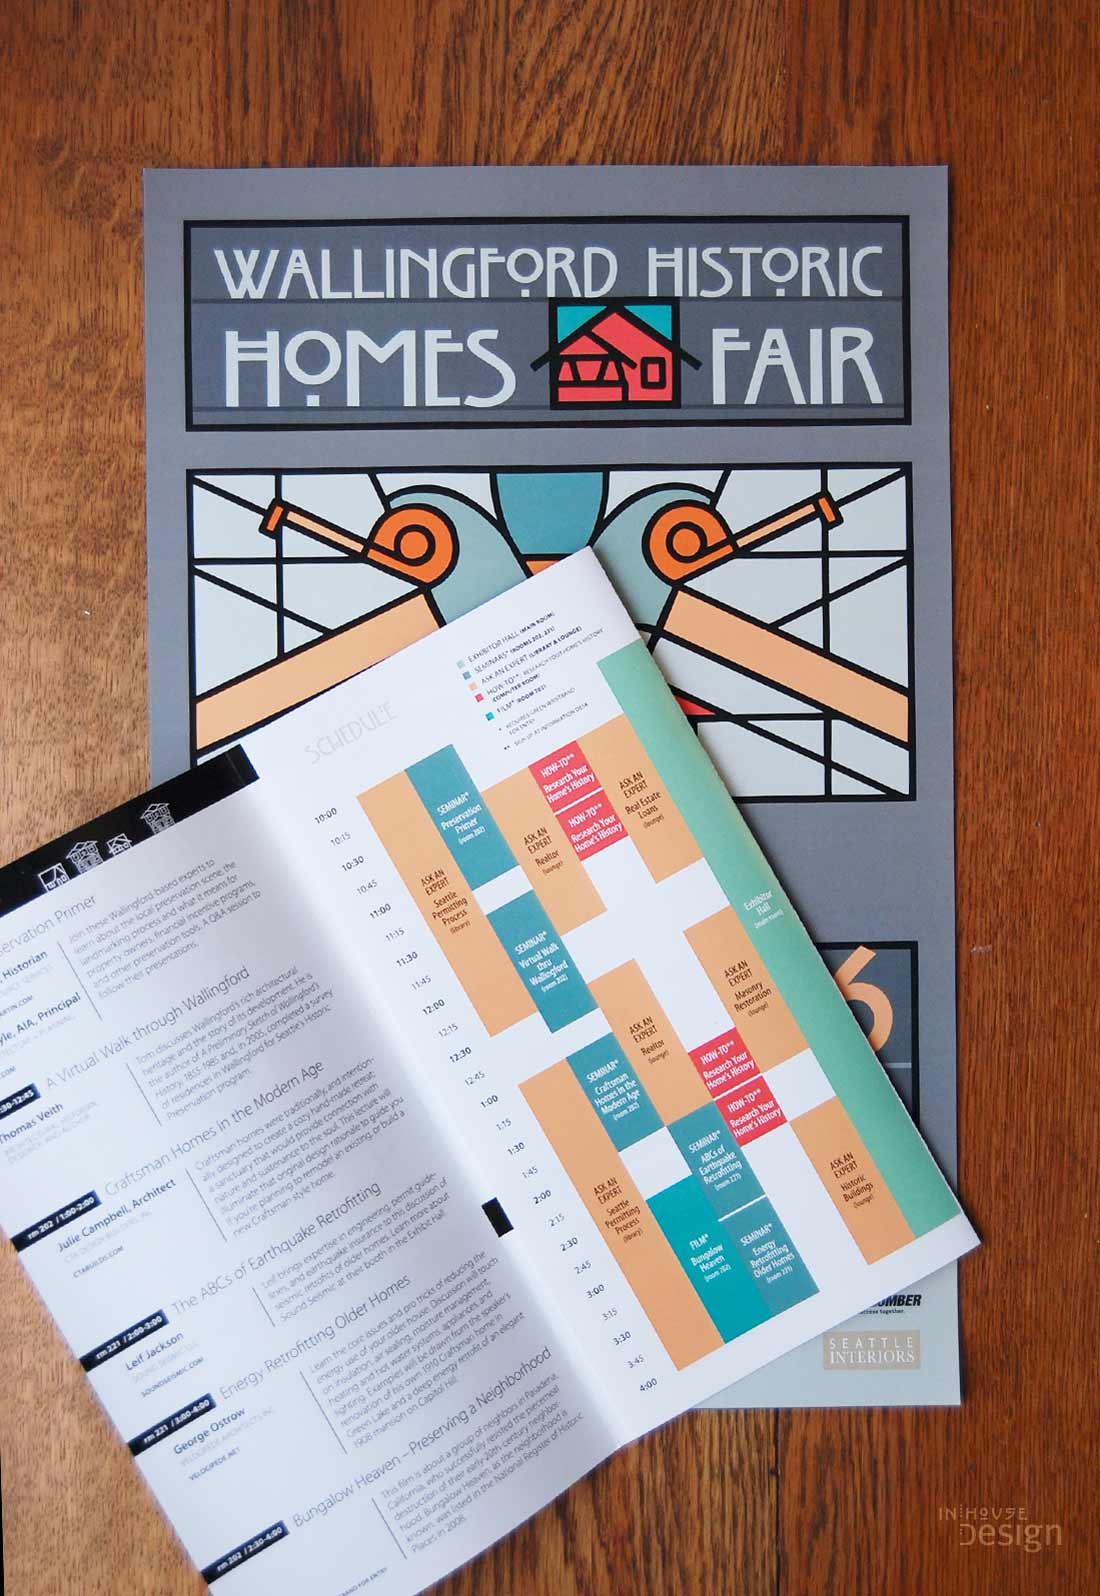 2019 Historic Homes Fair poster and program interior